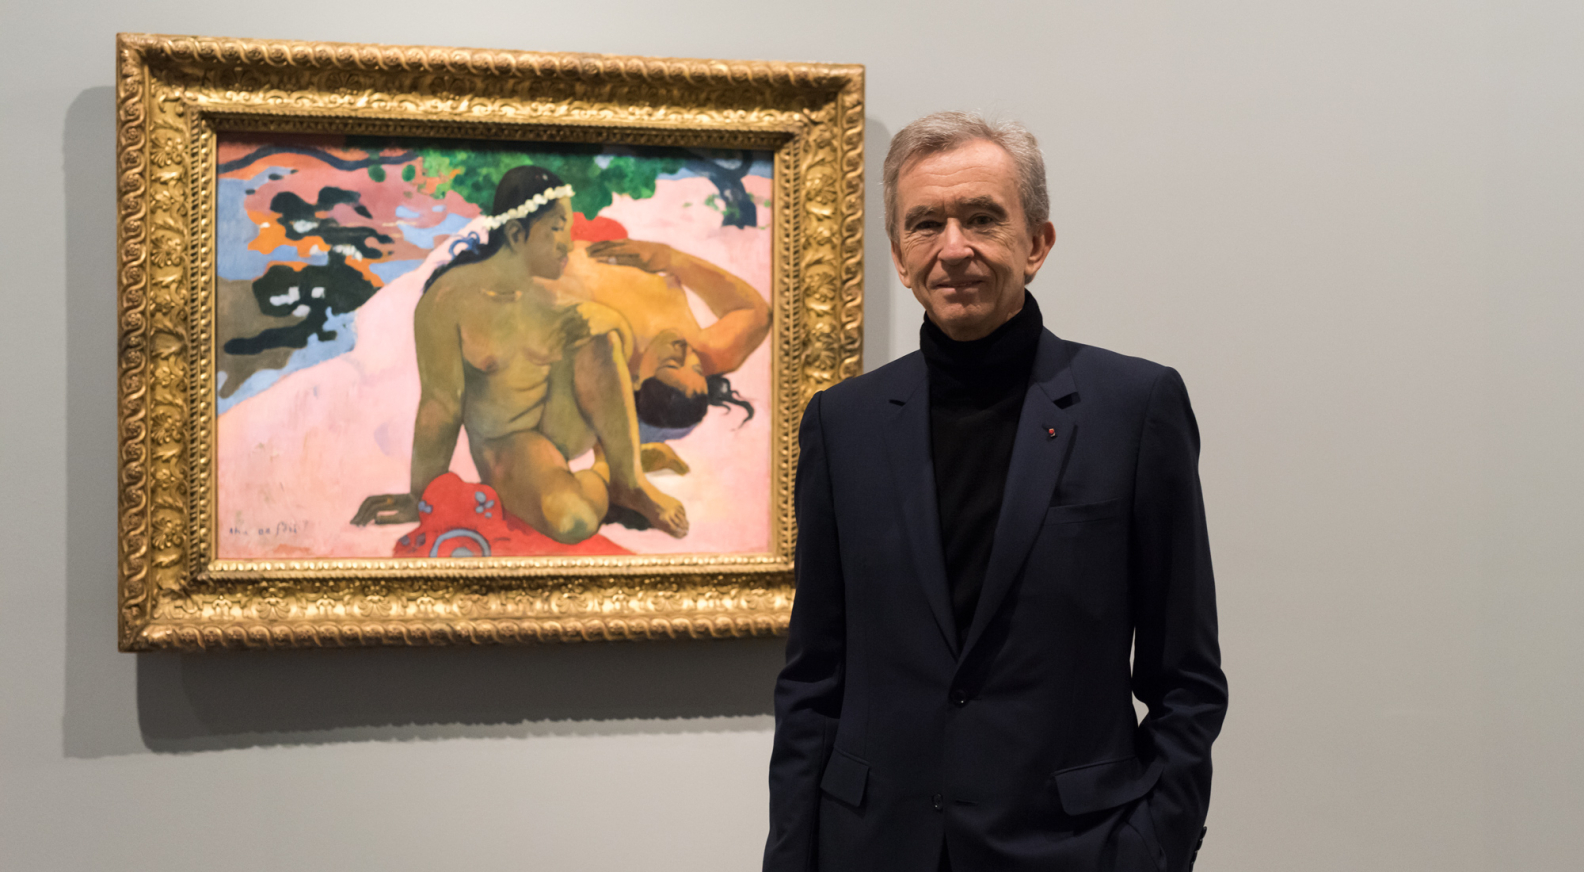 Putin thanks Bernard Arnault for exhibition dedicated to Russian art  collector Shchukin - Society & Culture - TASS